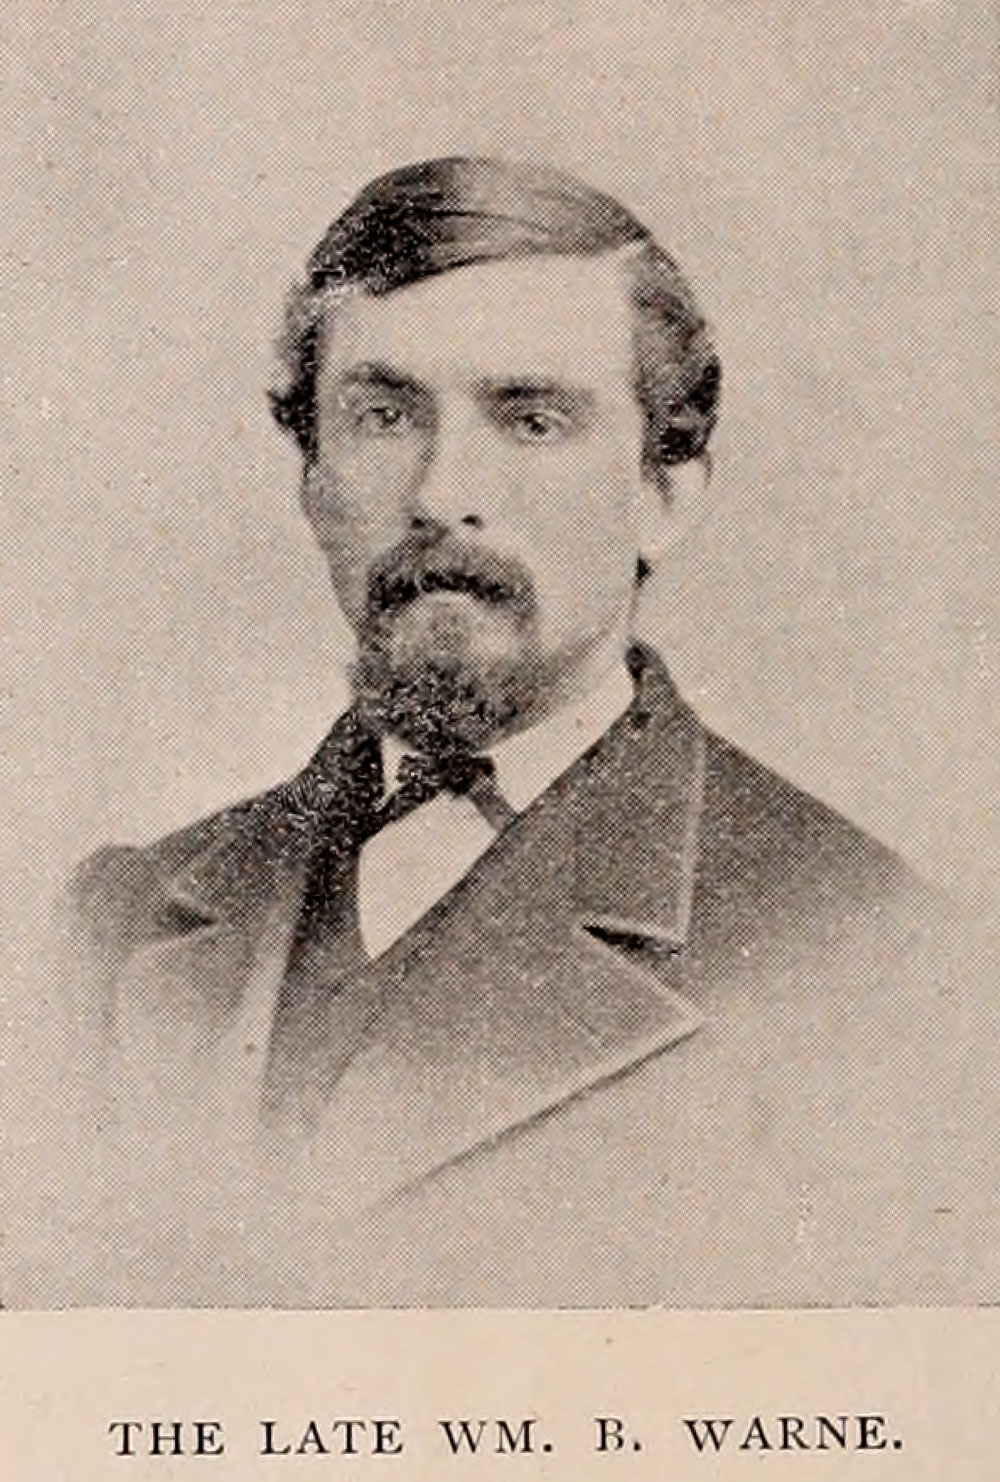 William B. Warne